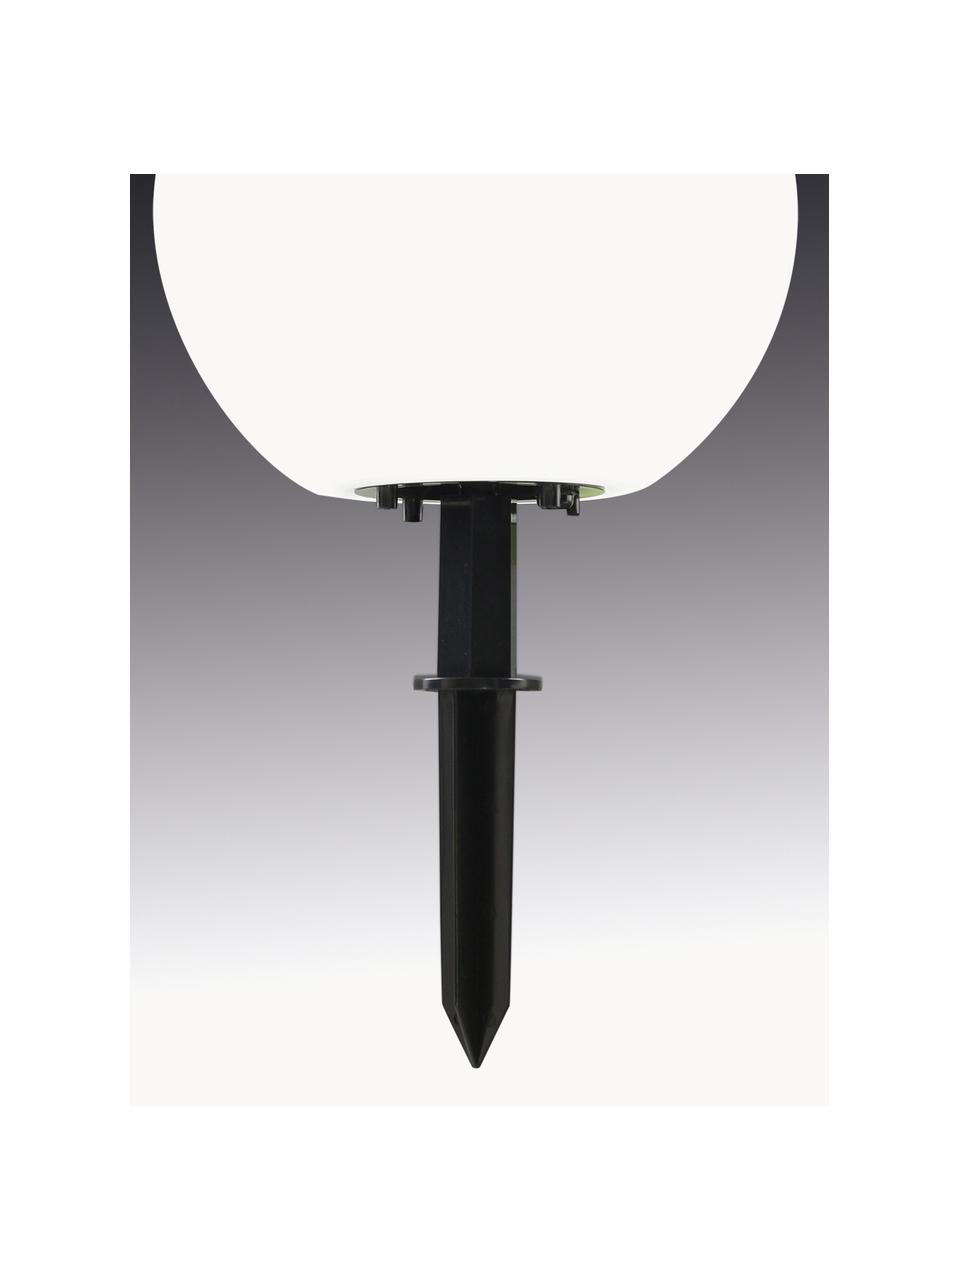 Vloerlamp Ball met stekker, Lamp: acrylglas, Wit, zwart, Ø 20 x H 64 cm